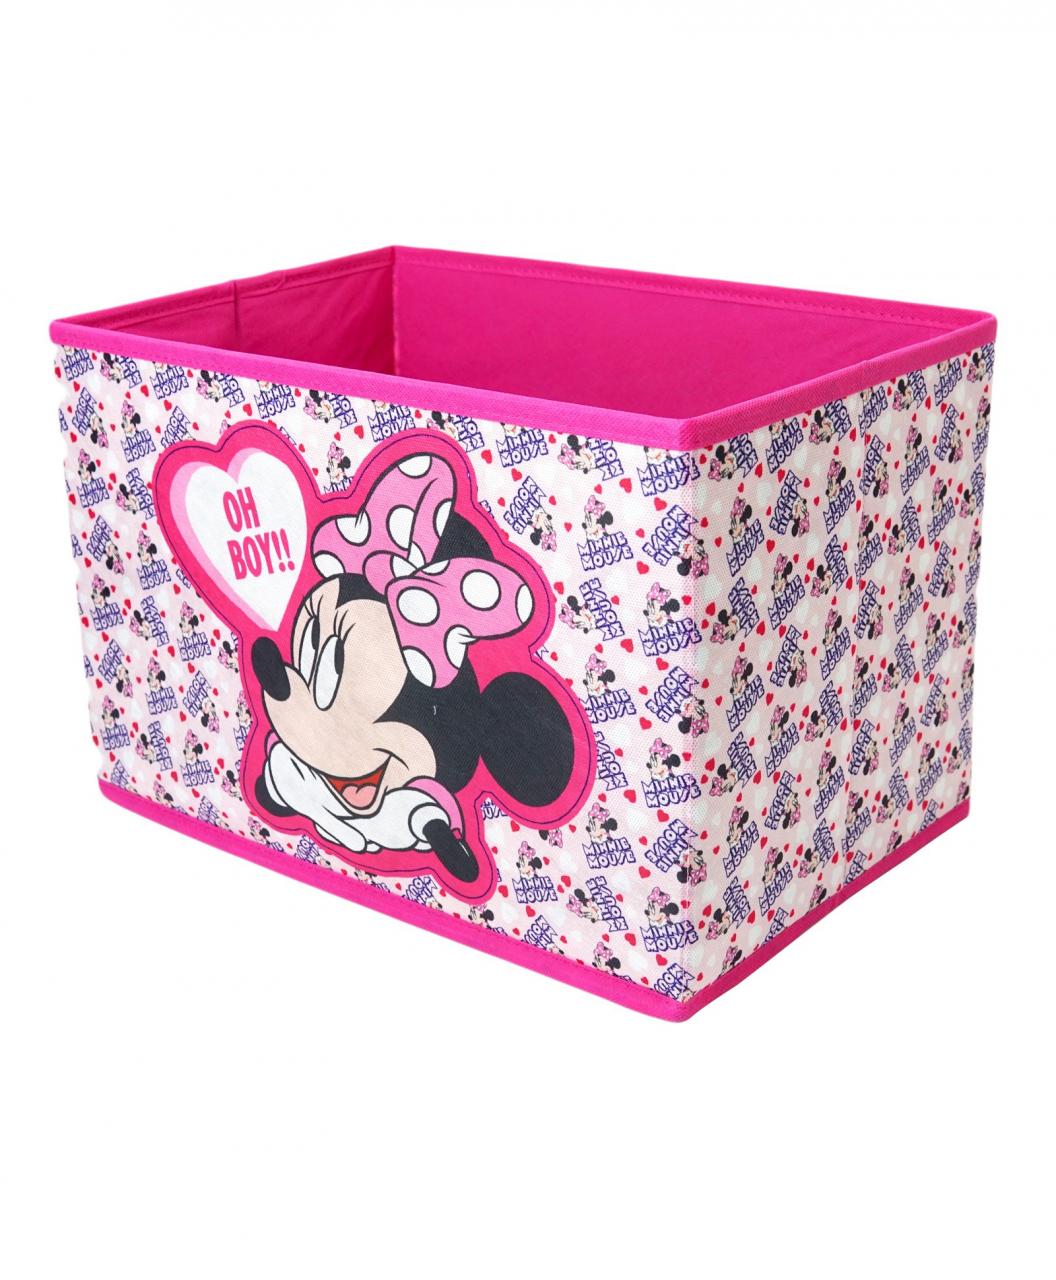 Disney Minnie Mouse Storage Box Pink Online in UAE, Buy at Best Price